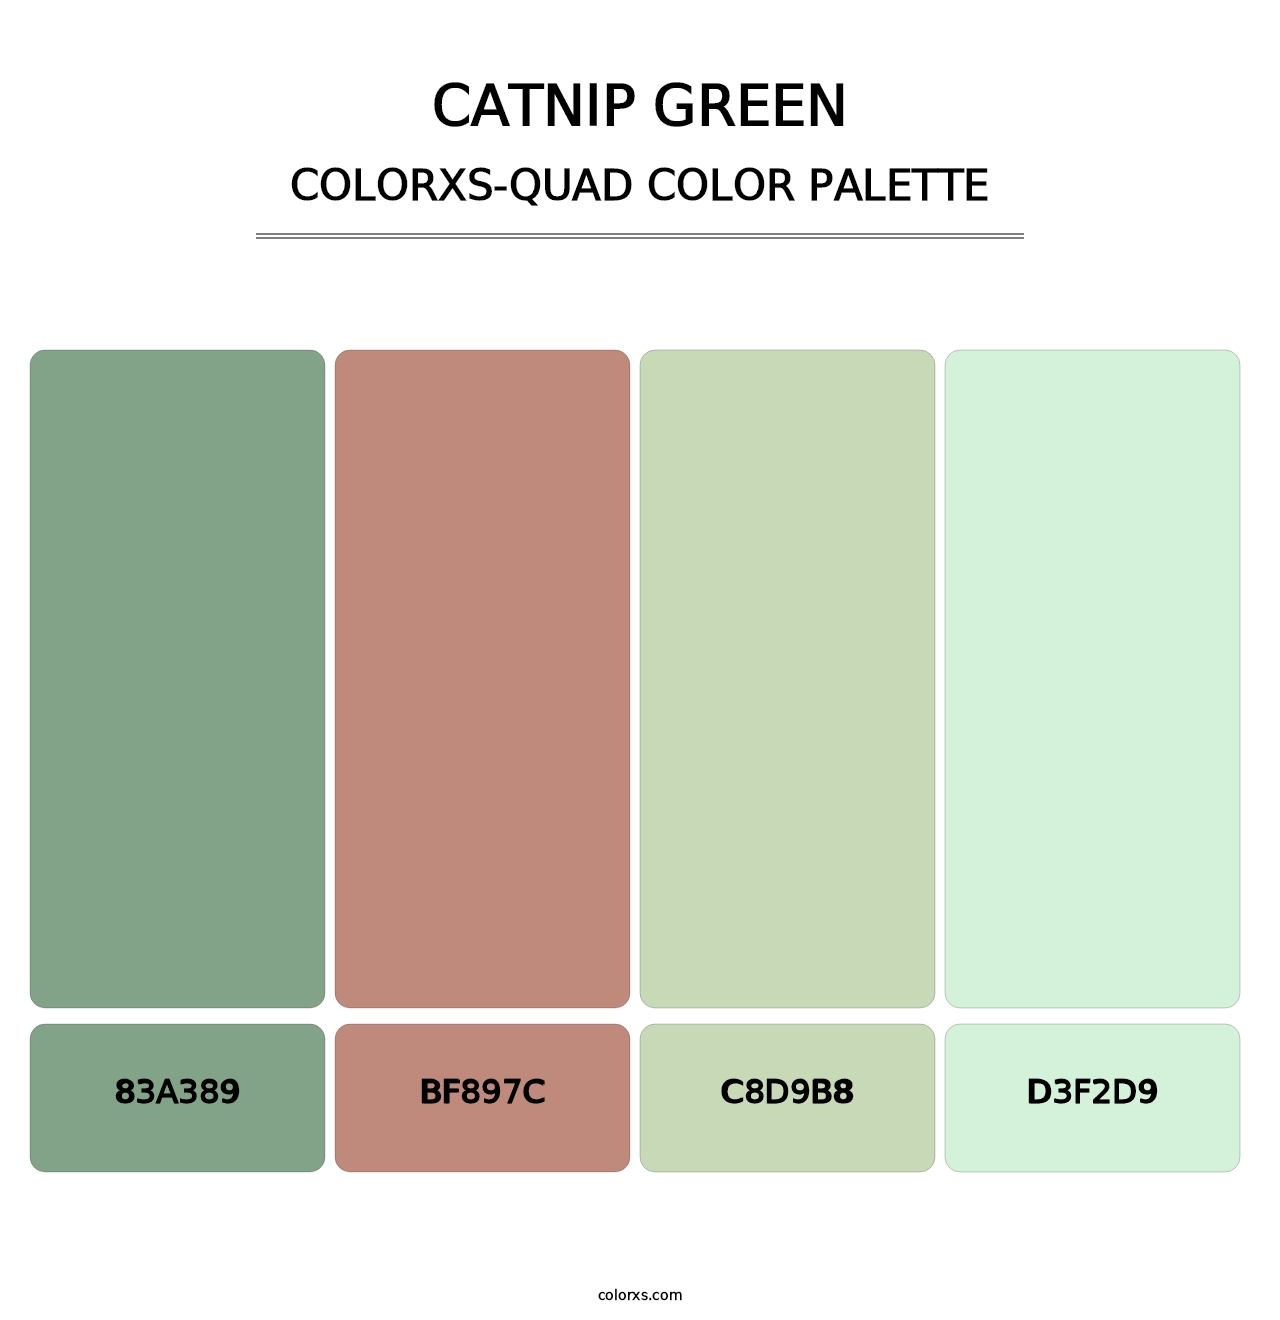 Catnip Green - Colorxs Quad Palette